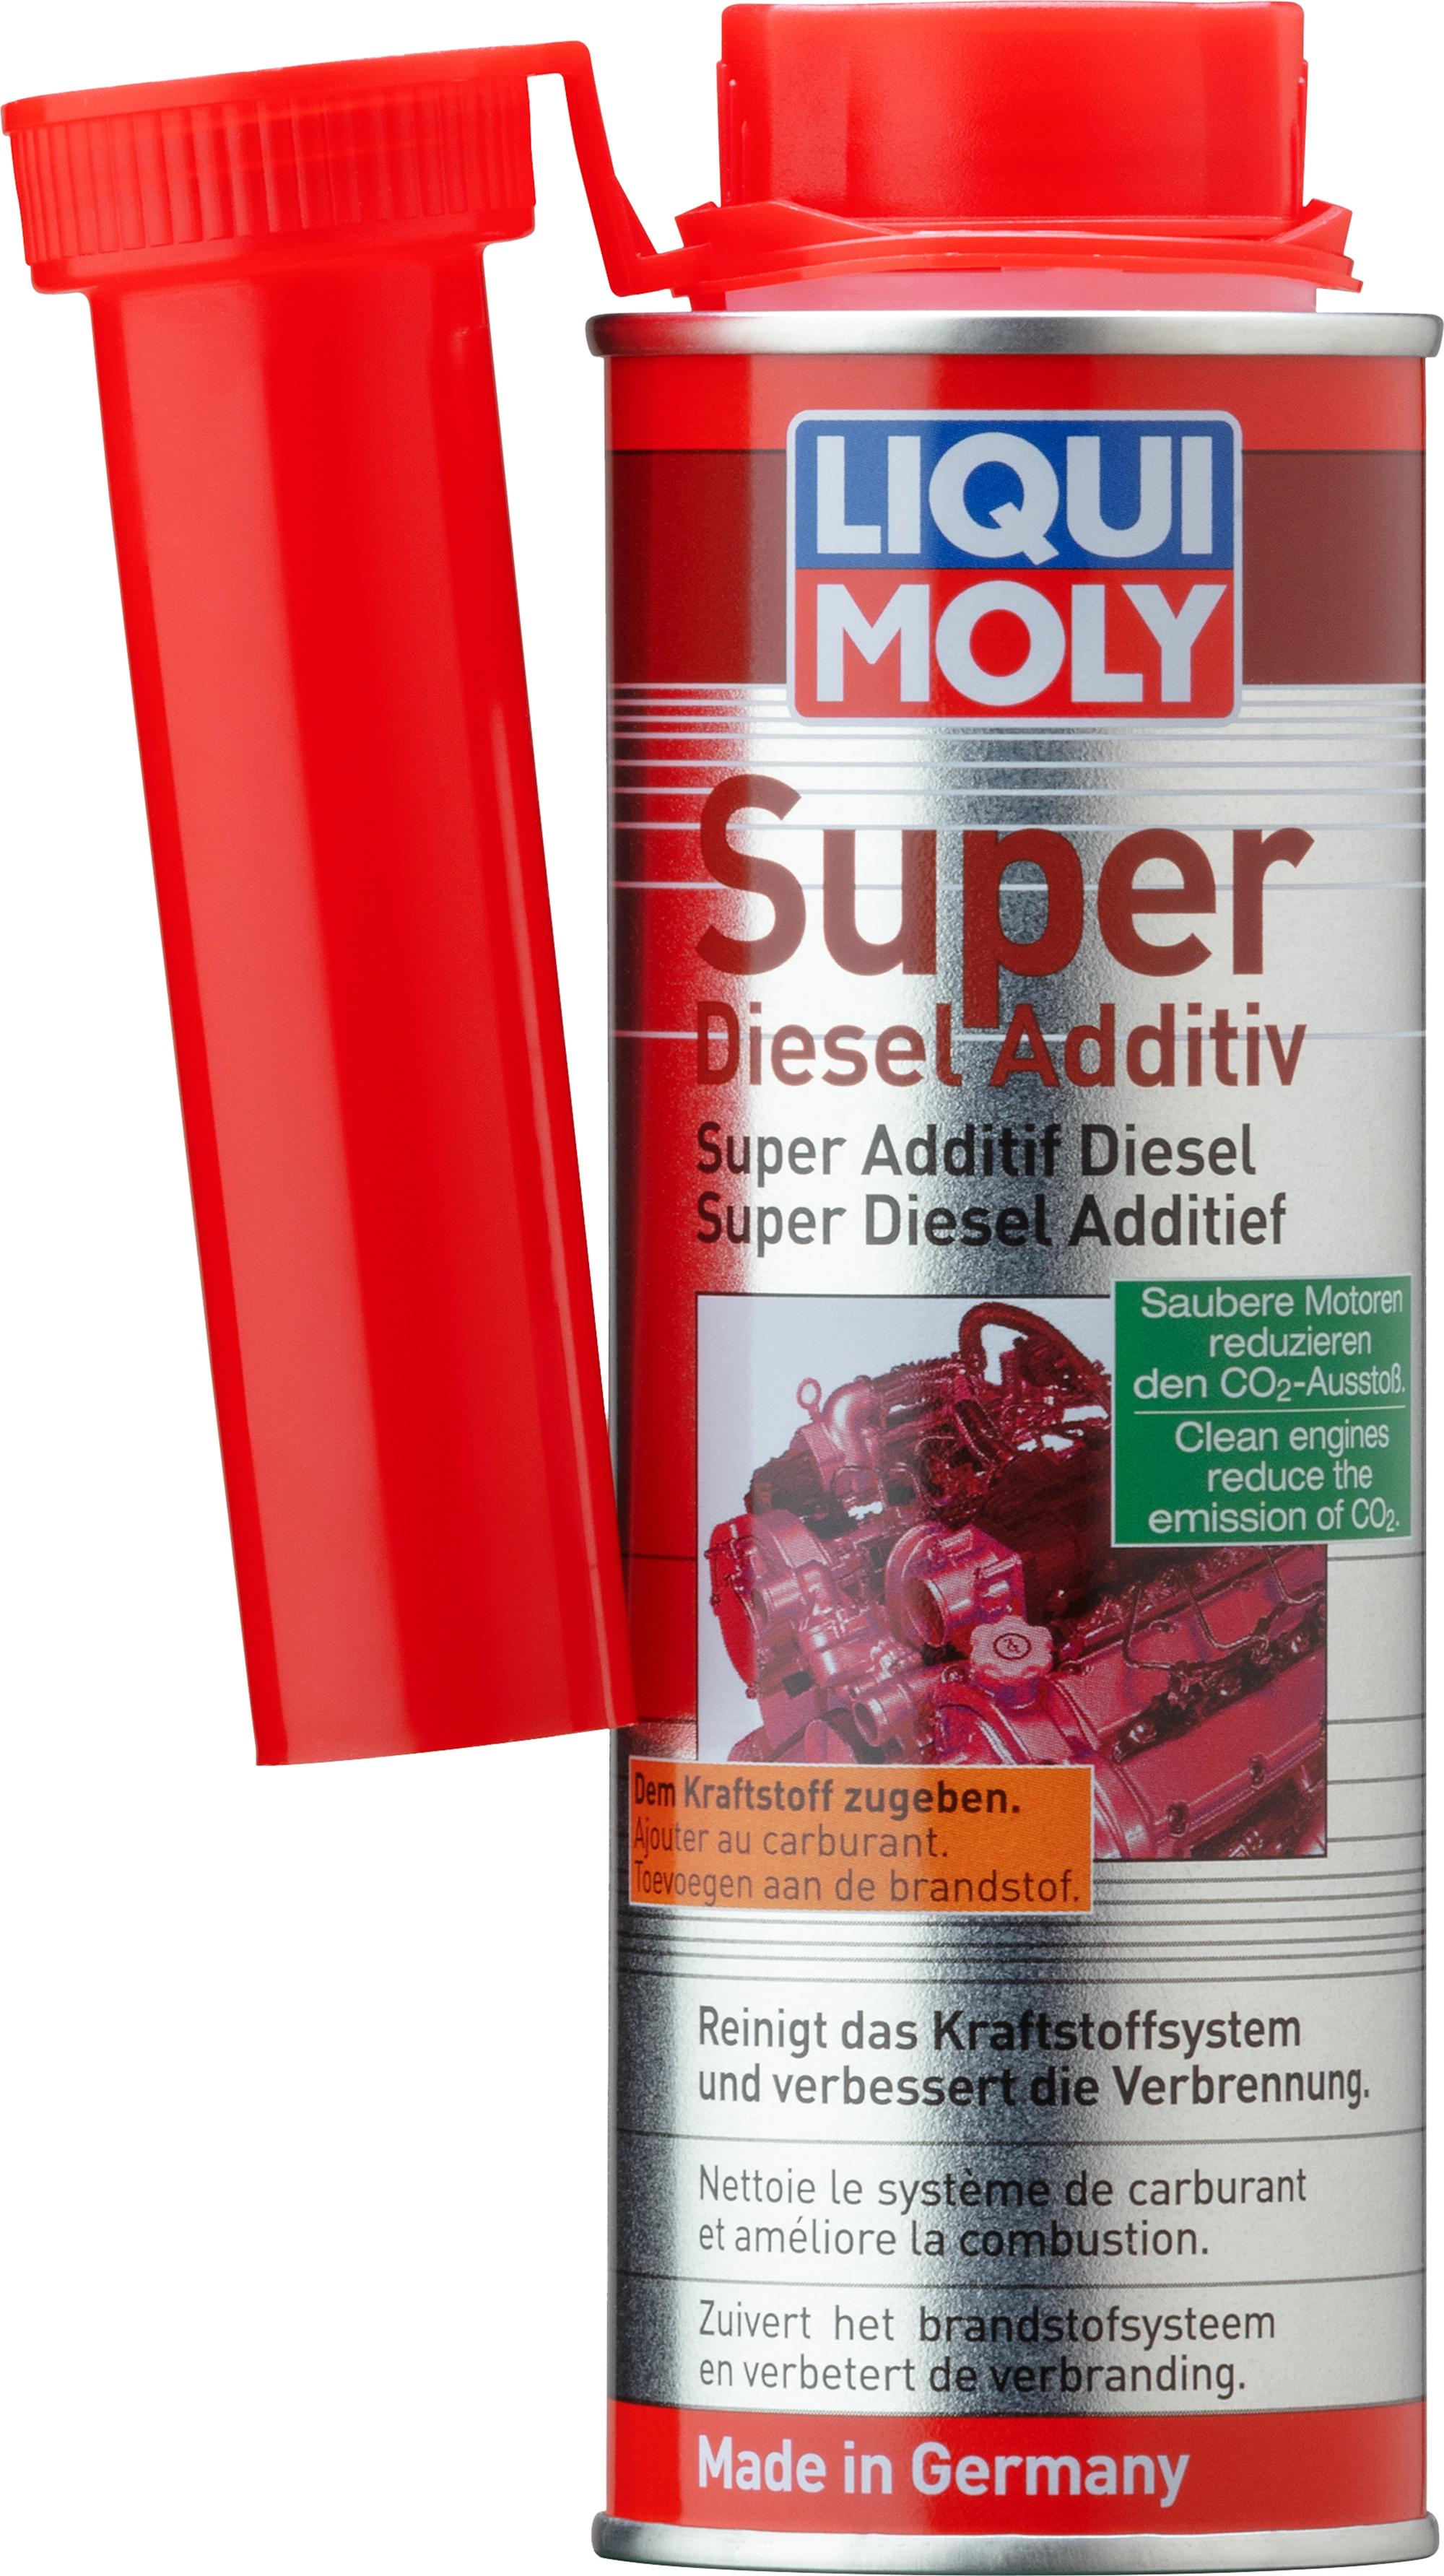 Liqui Moly 2-Takt-Motorsägen-Öl 1 l kaufen bei OBI